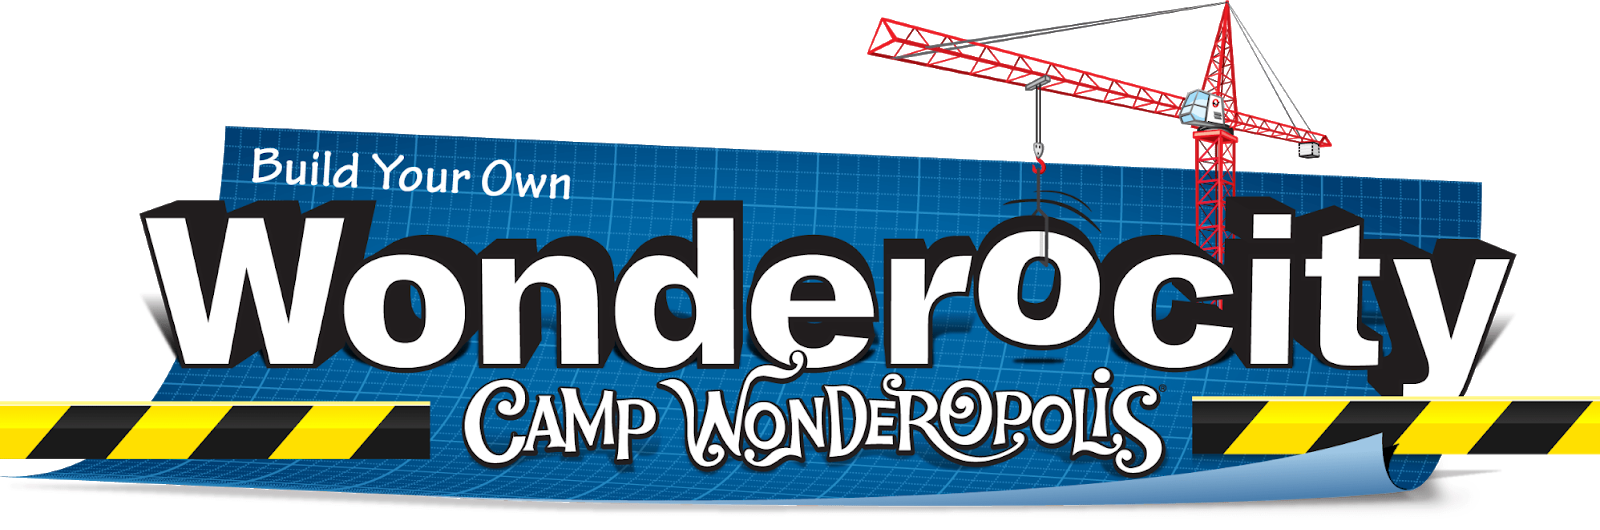 Build Your Own Wonderocity - Camp Wonderopolis